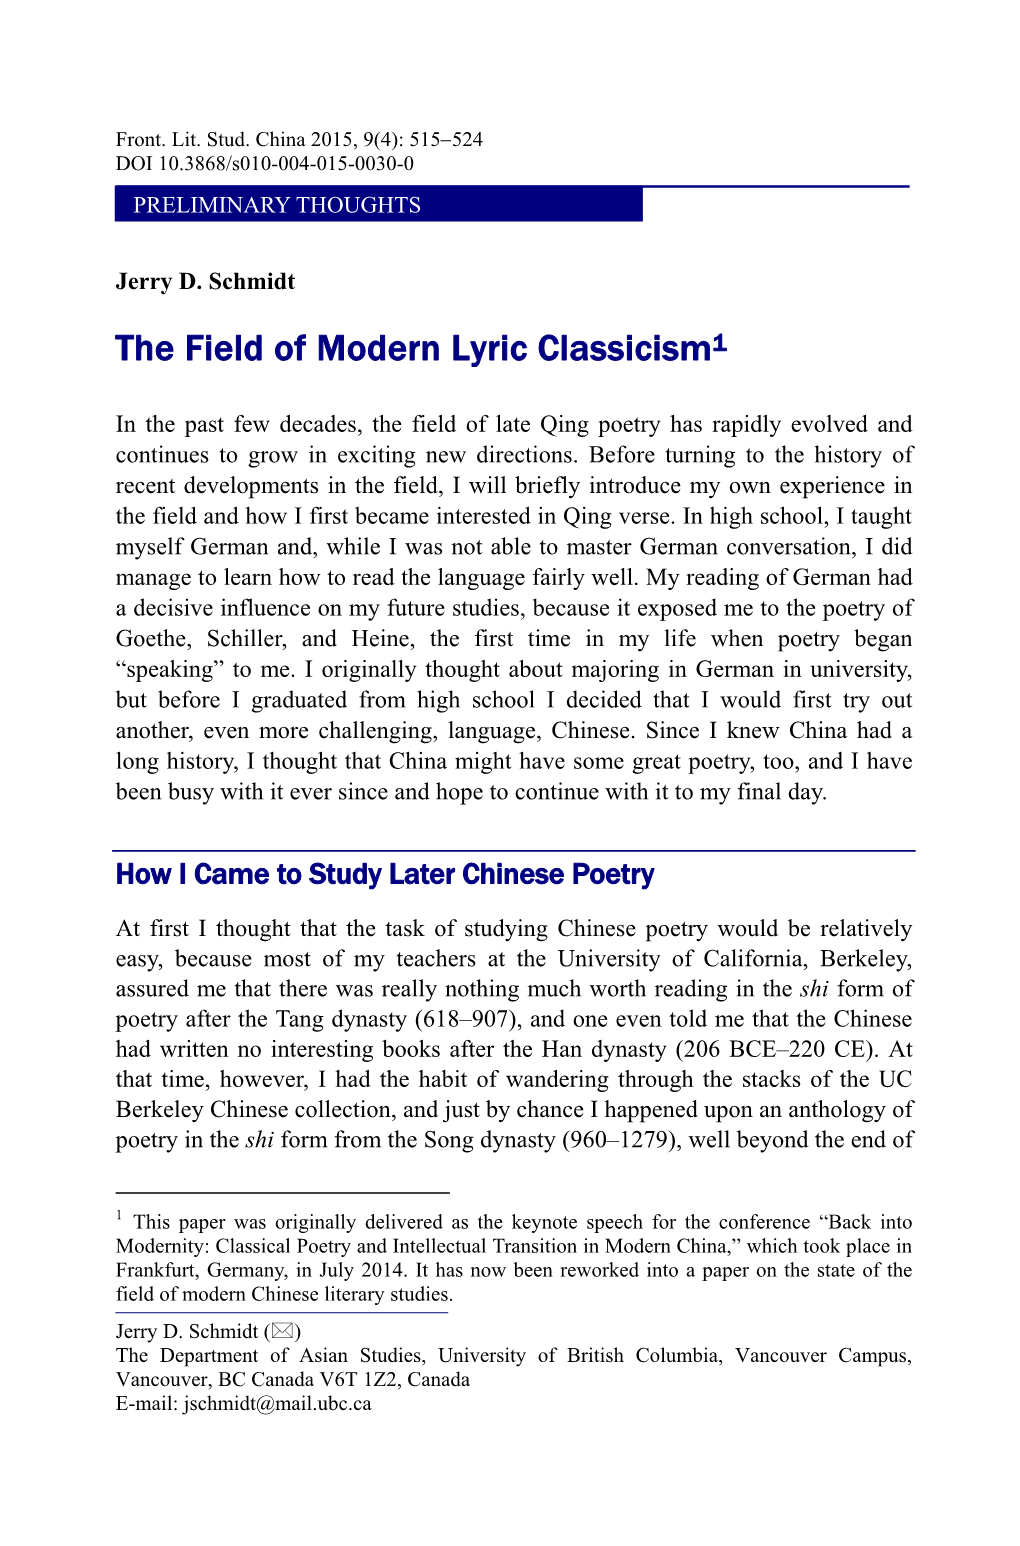 The Field of Modern Lyric Classicism1